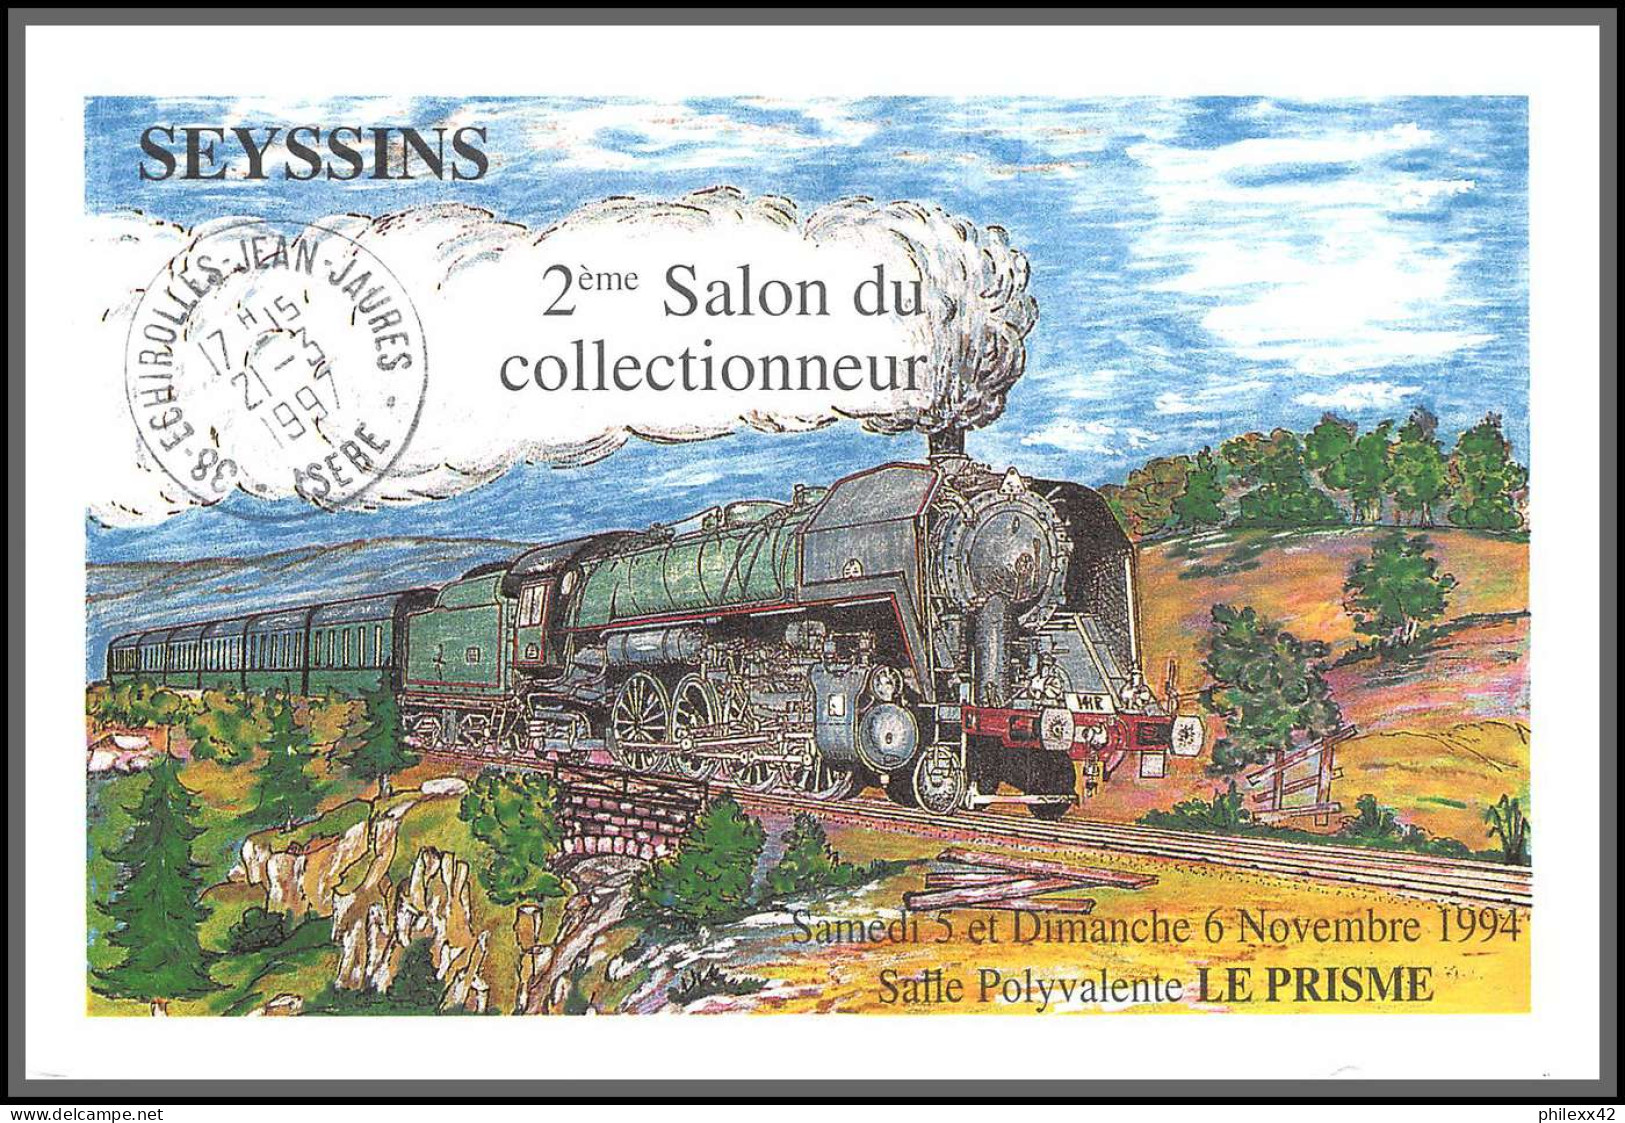 74321 Mixte Atm Briat 17/3/1997 Combani Mayotte Echirolles Isère France Carte Postcard Colonies  - Storia Postale